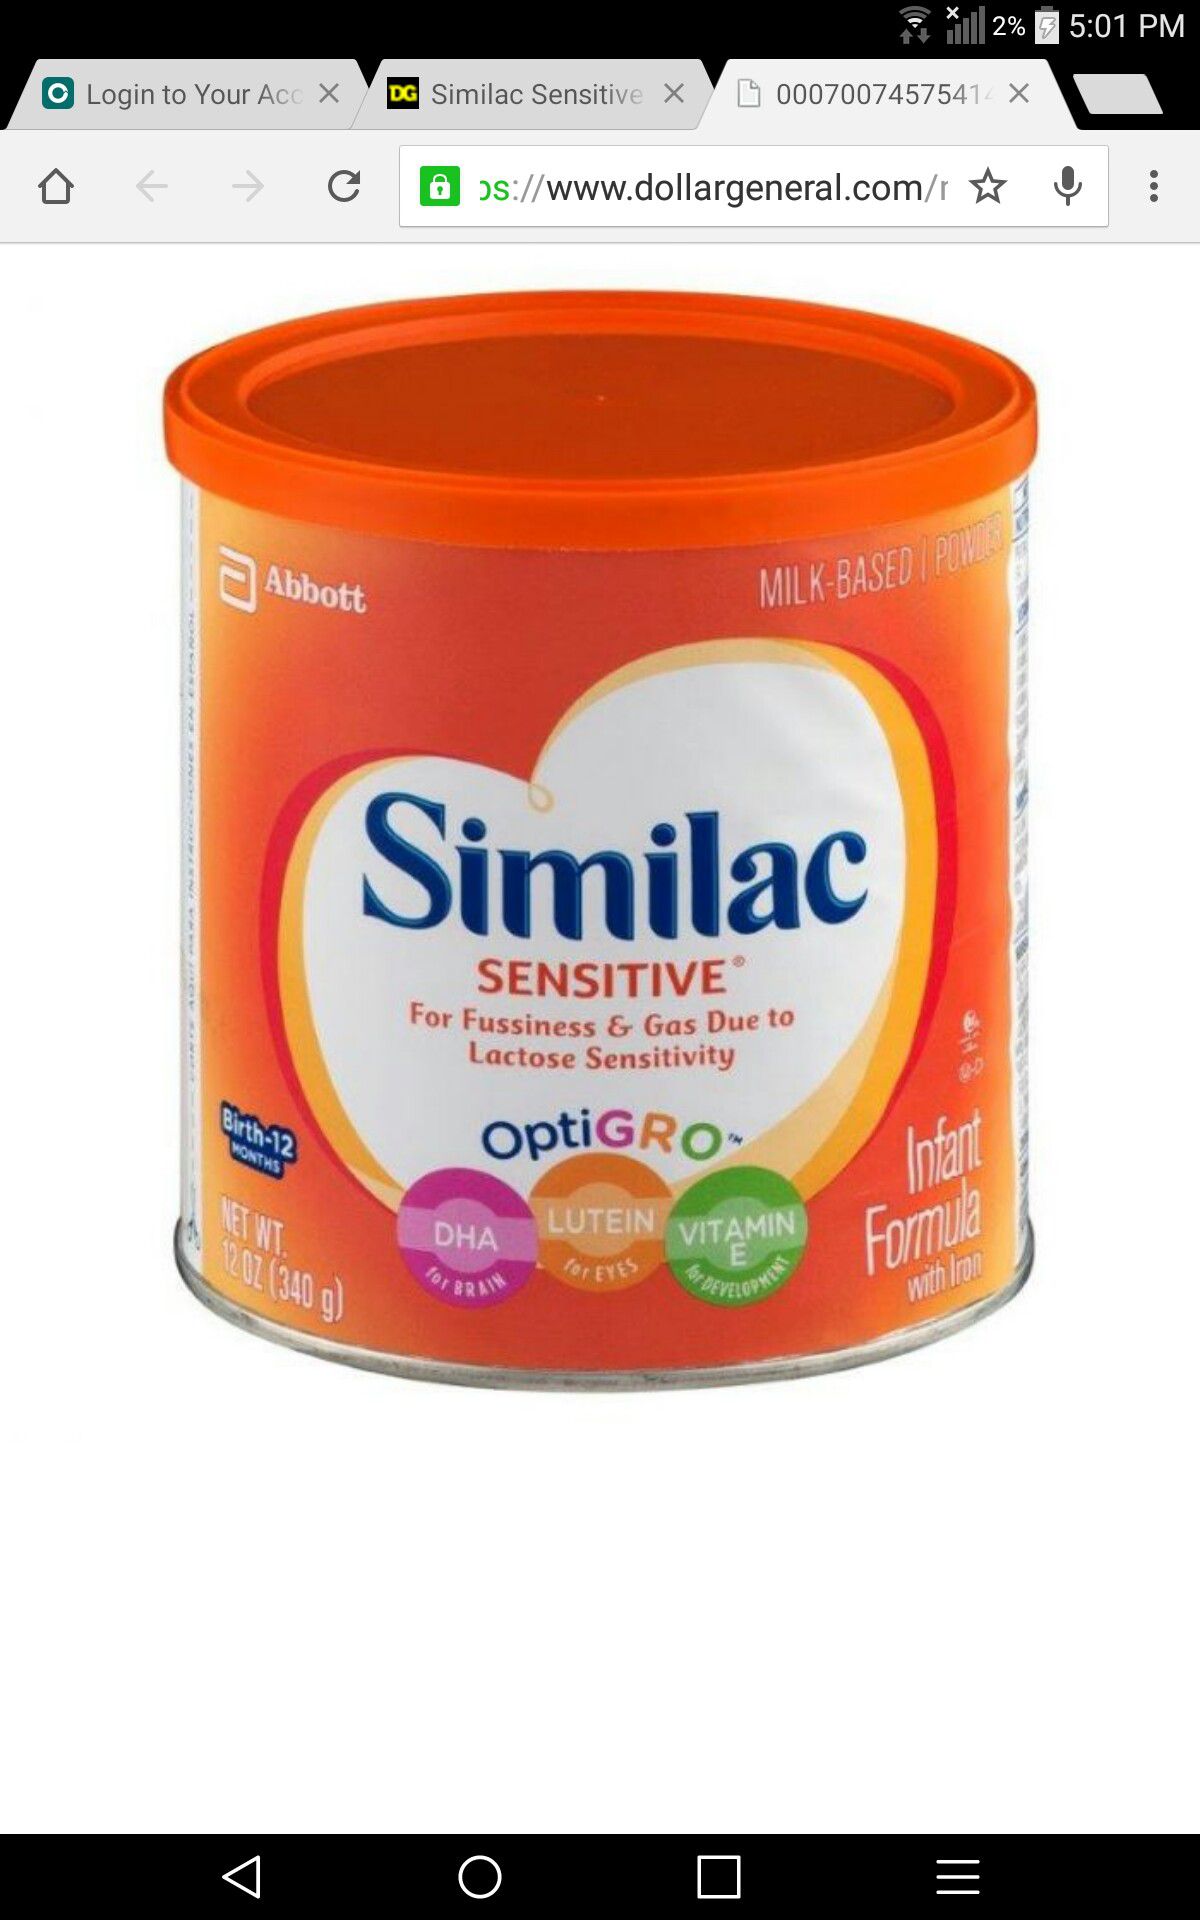 Similac sensitive 12 oz cans